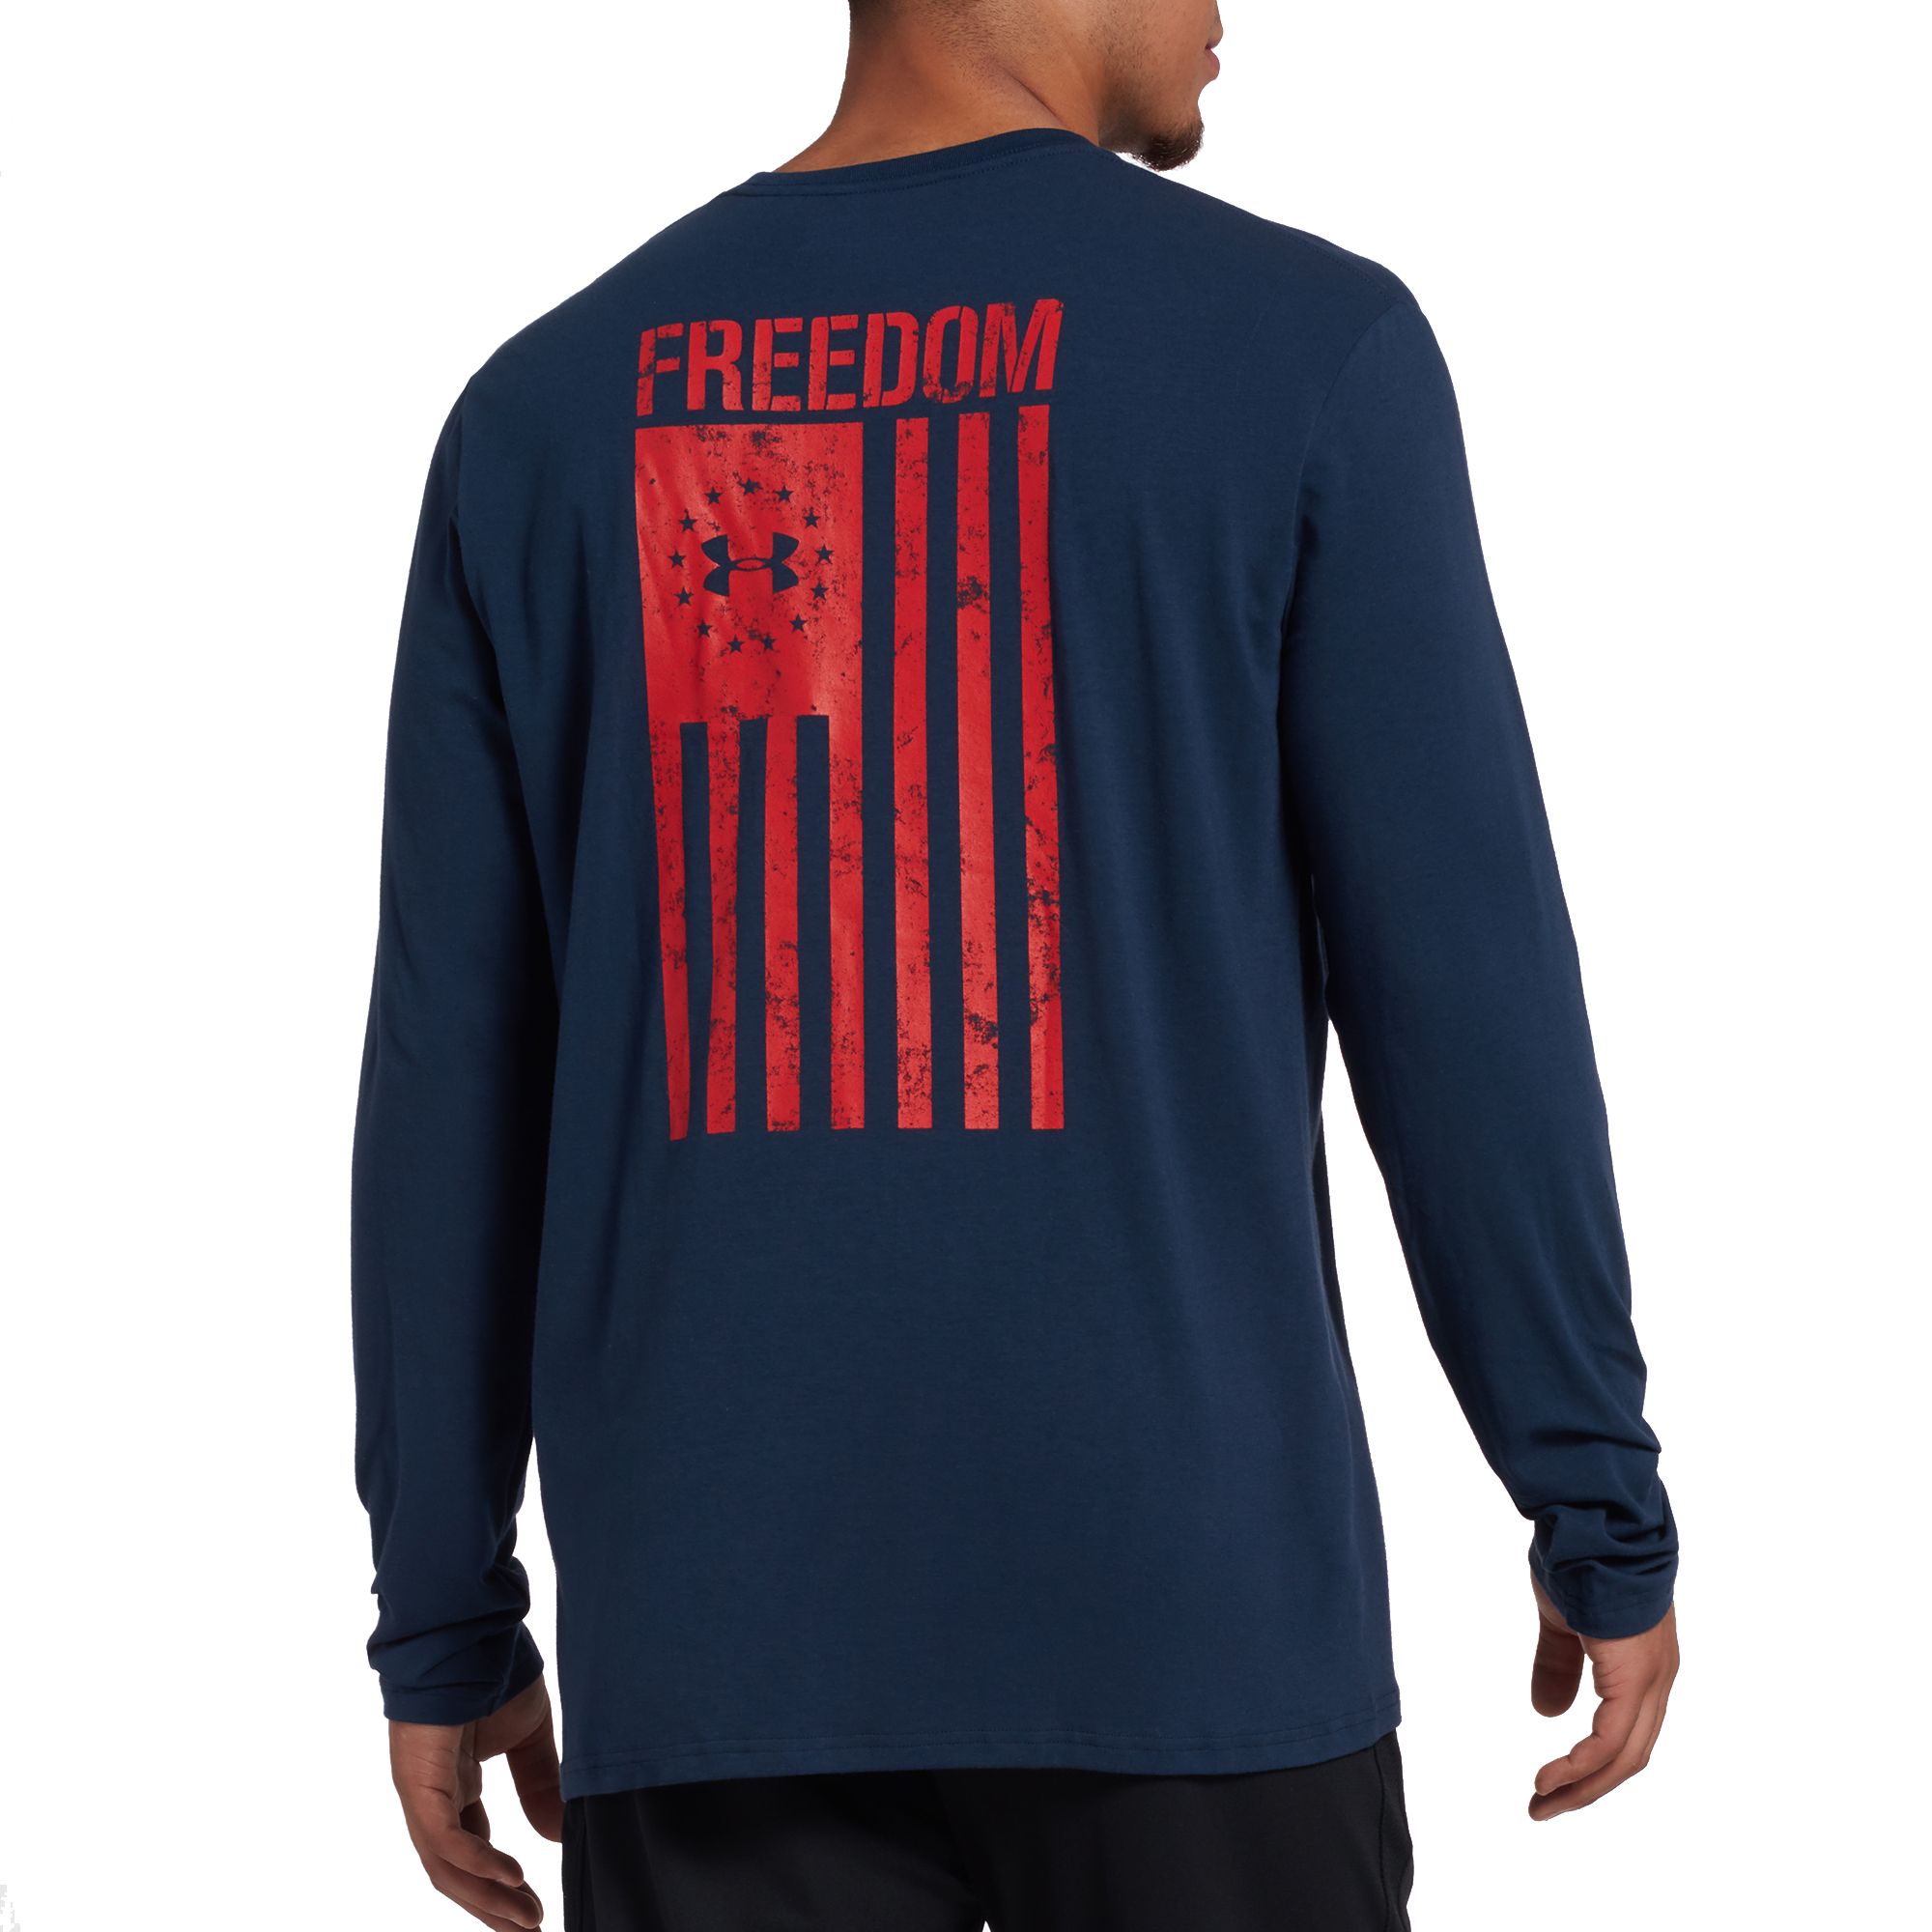 freedom under armour shirt